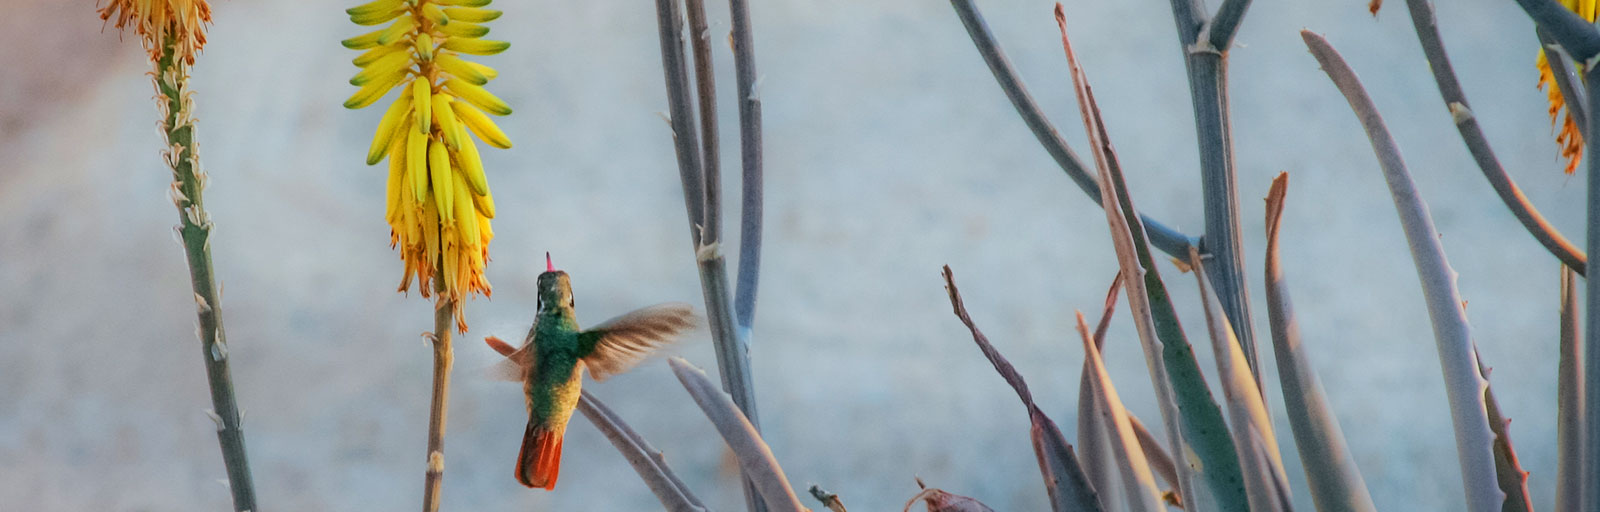 Yoga Retreat Scenics: Hummingbird Sip Nectar in the Garden